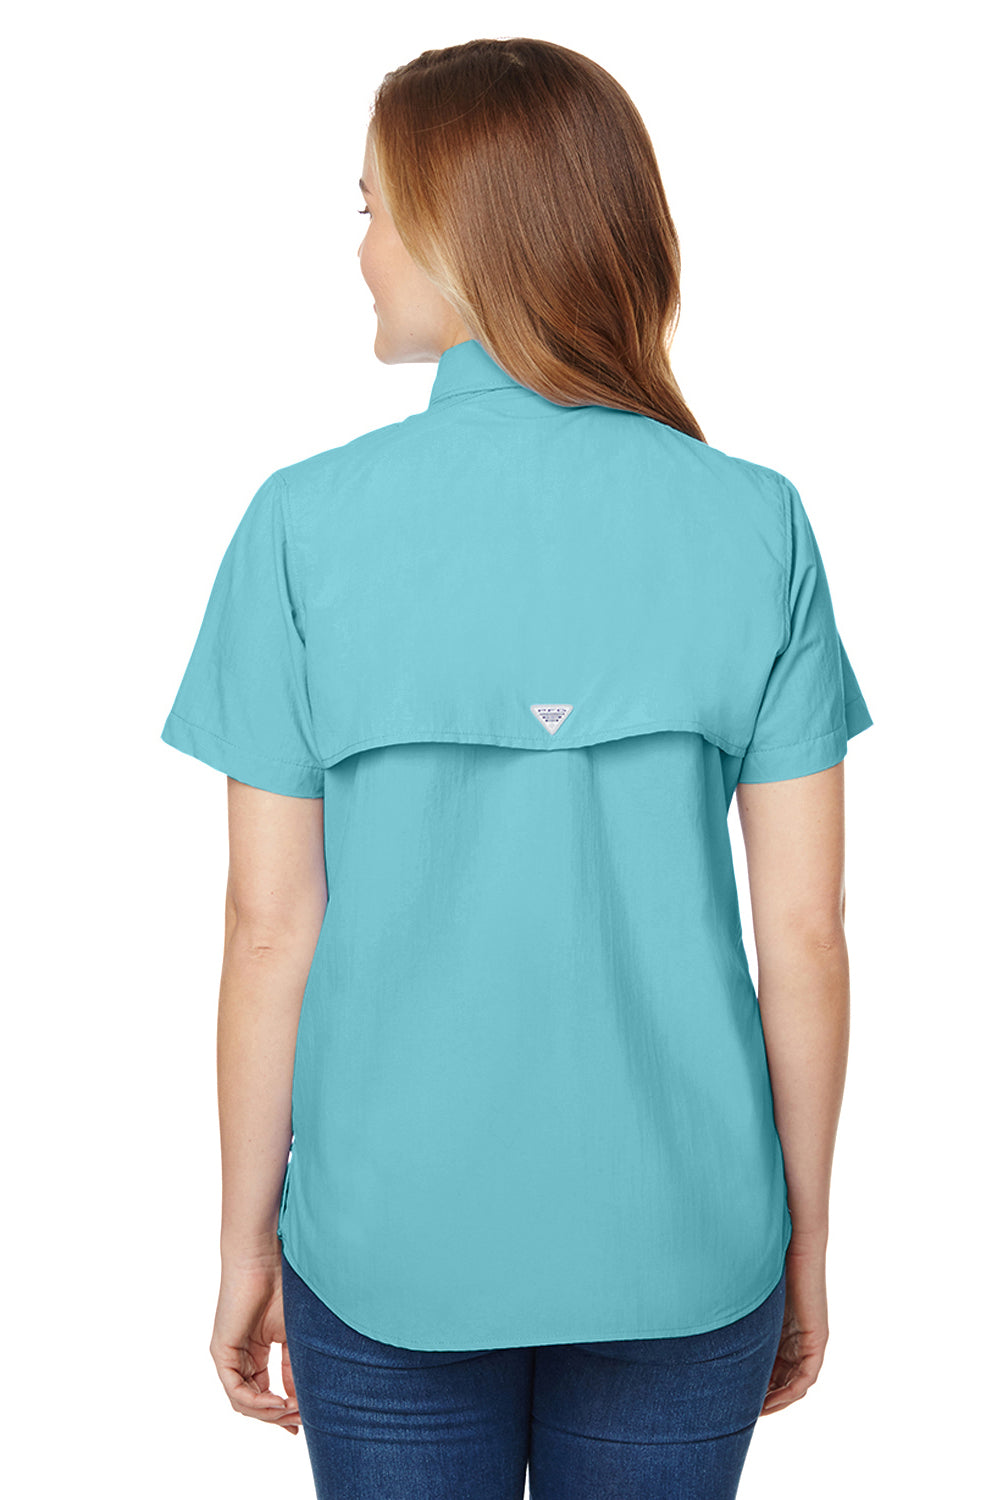 Columbia 7313 Womens Bahama Moisture Wicking Short Sleeve Button Down Shirt w/ Double Pockets Clear Blue Back